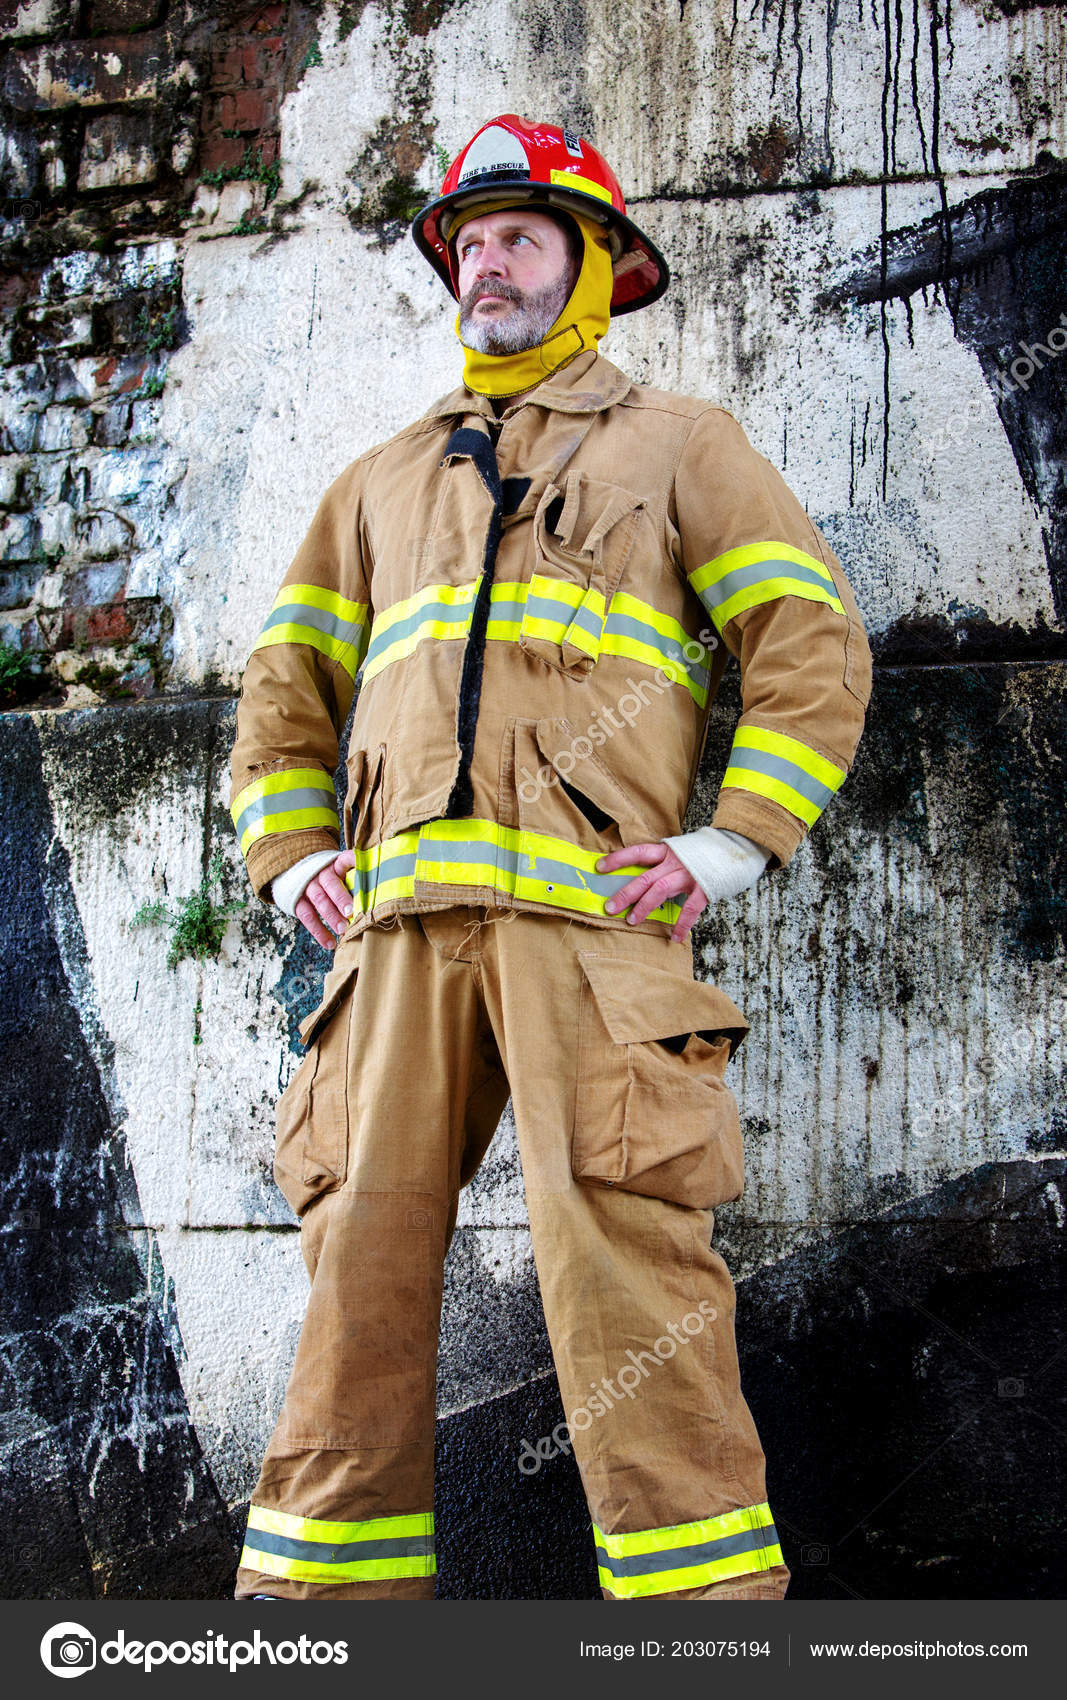 Bombero con uniforme y casco adulto bombero de pie